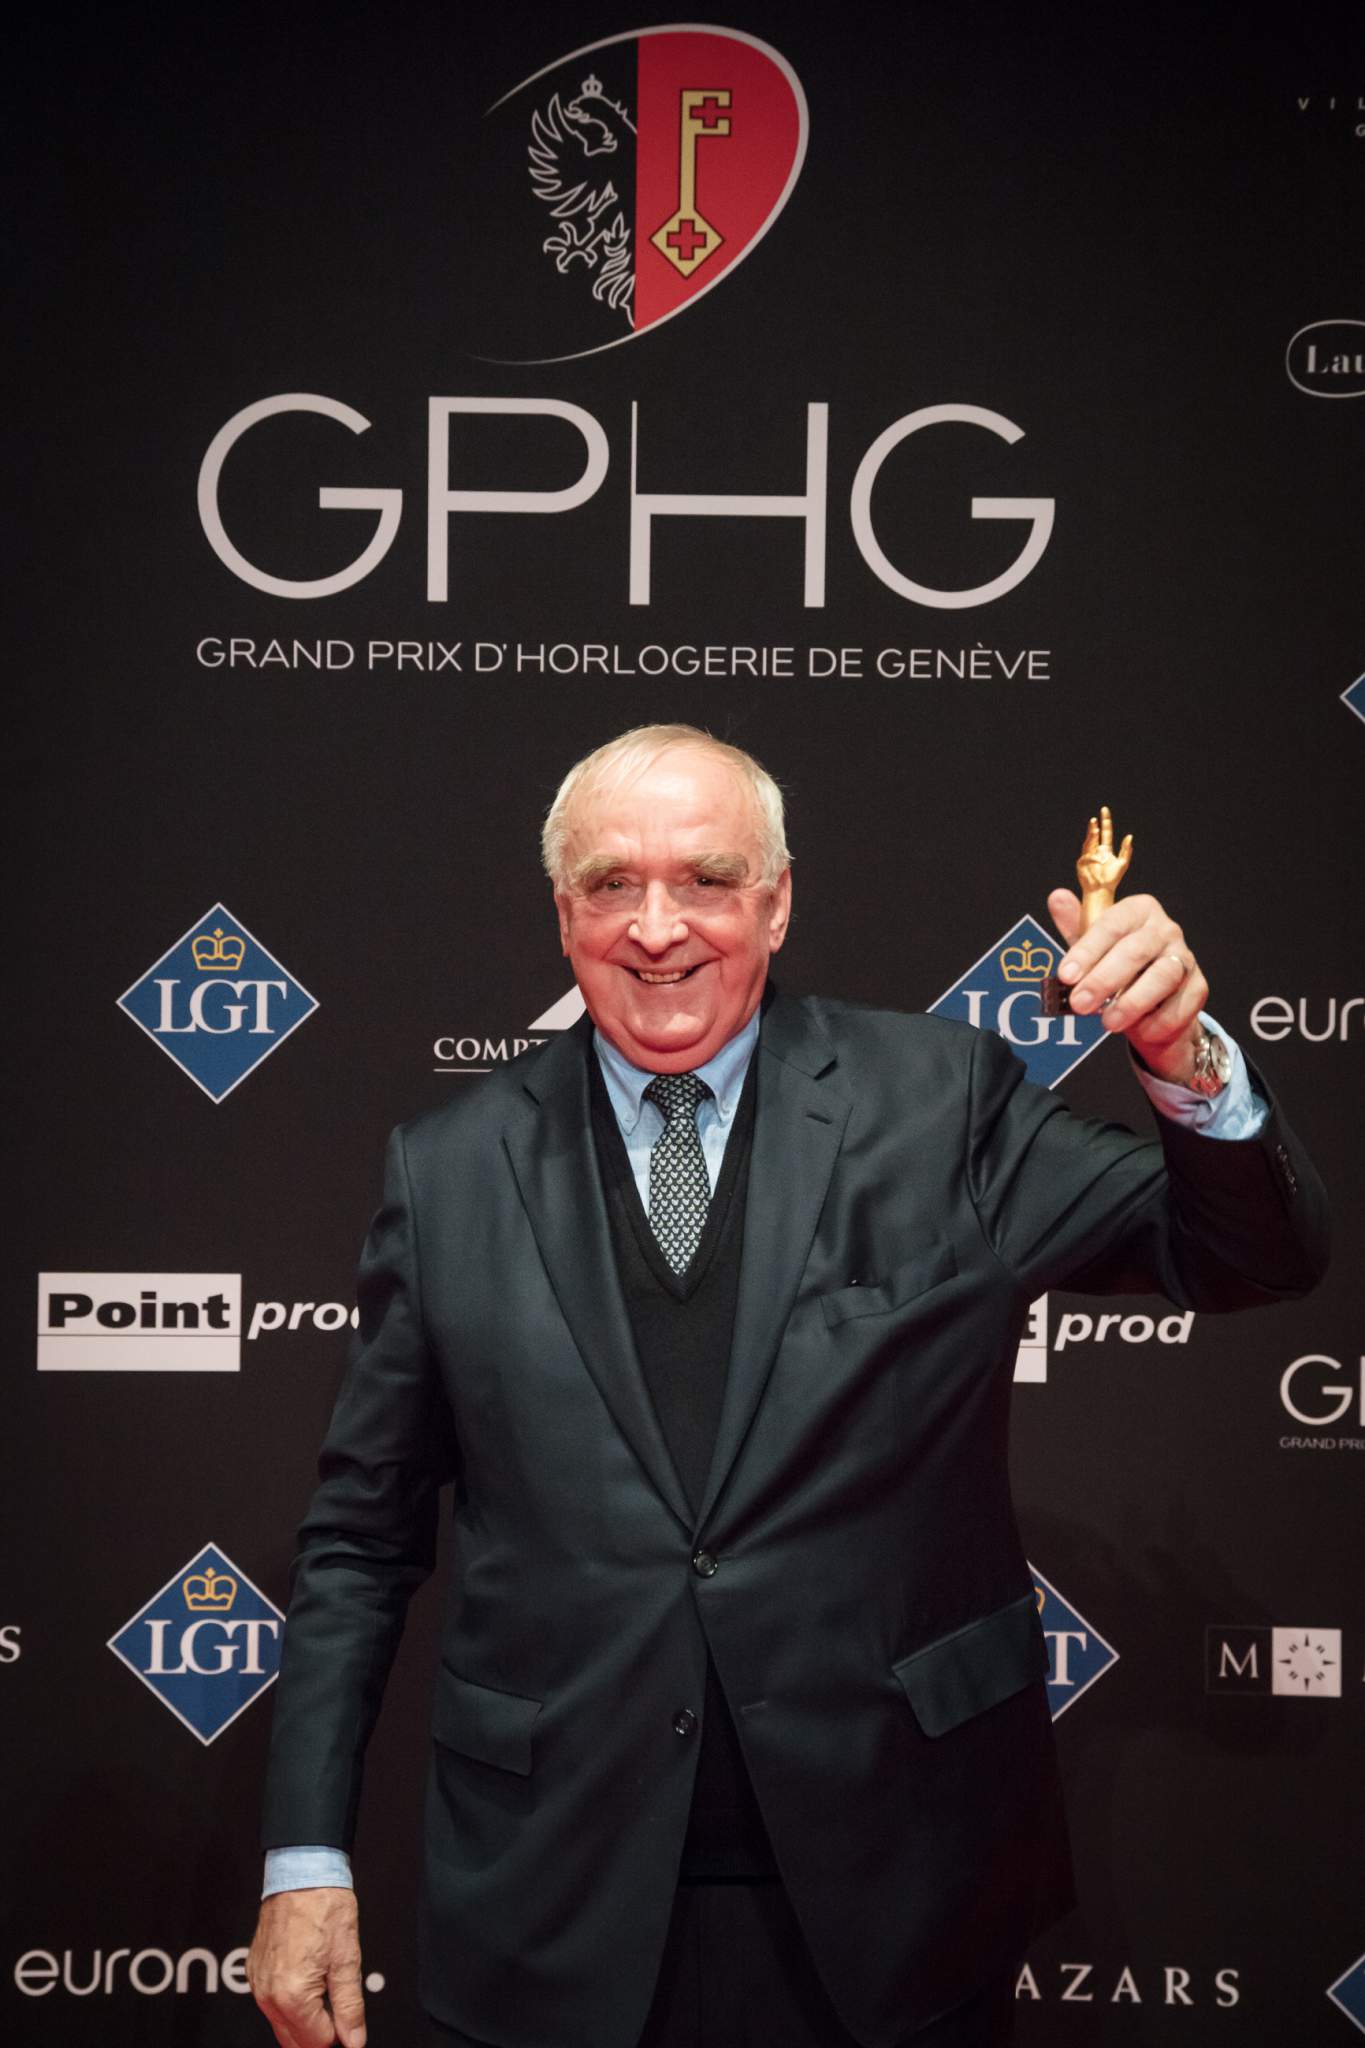 Walter von Känel (President General Director of Longines, winner of the Revival Watch Prize 2017)